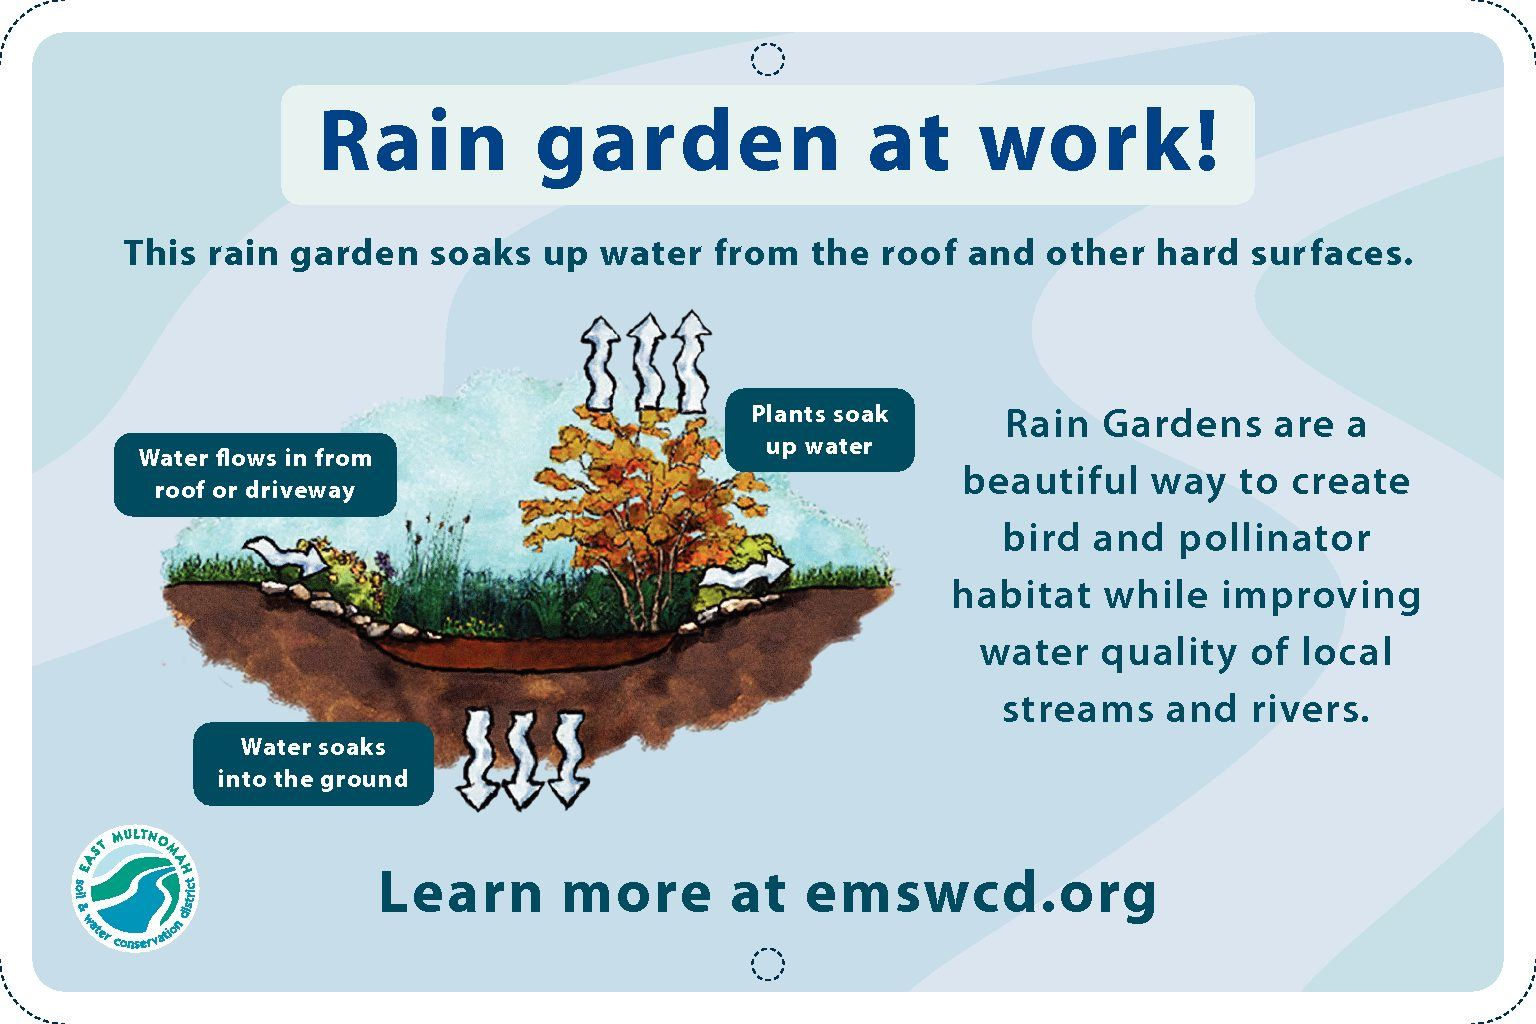 Benefits of Rain Gardens